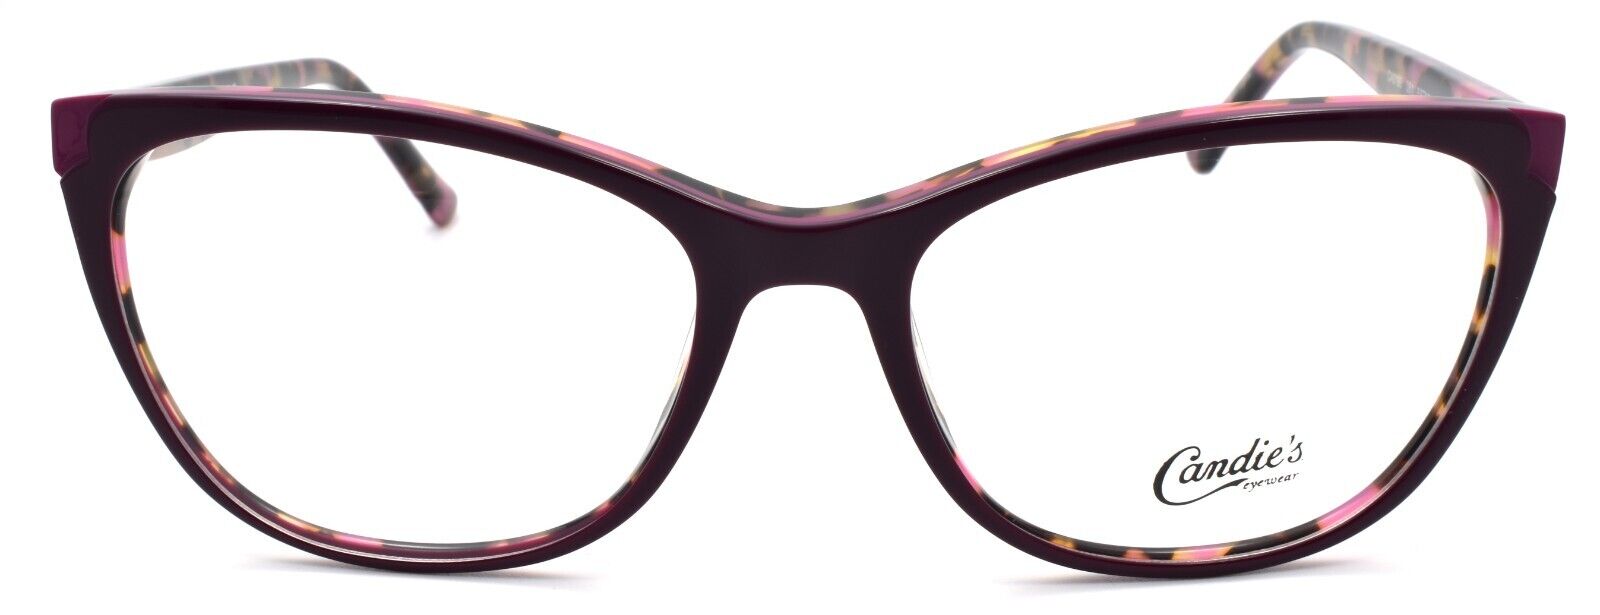 2-Candies CA0188 081 Women's Eyeglasses Frames 53-17-140 Shiny Violet-889214172709-IKSpecs